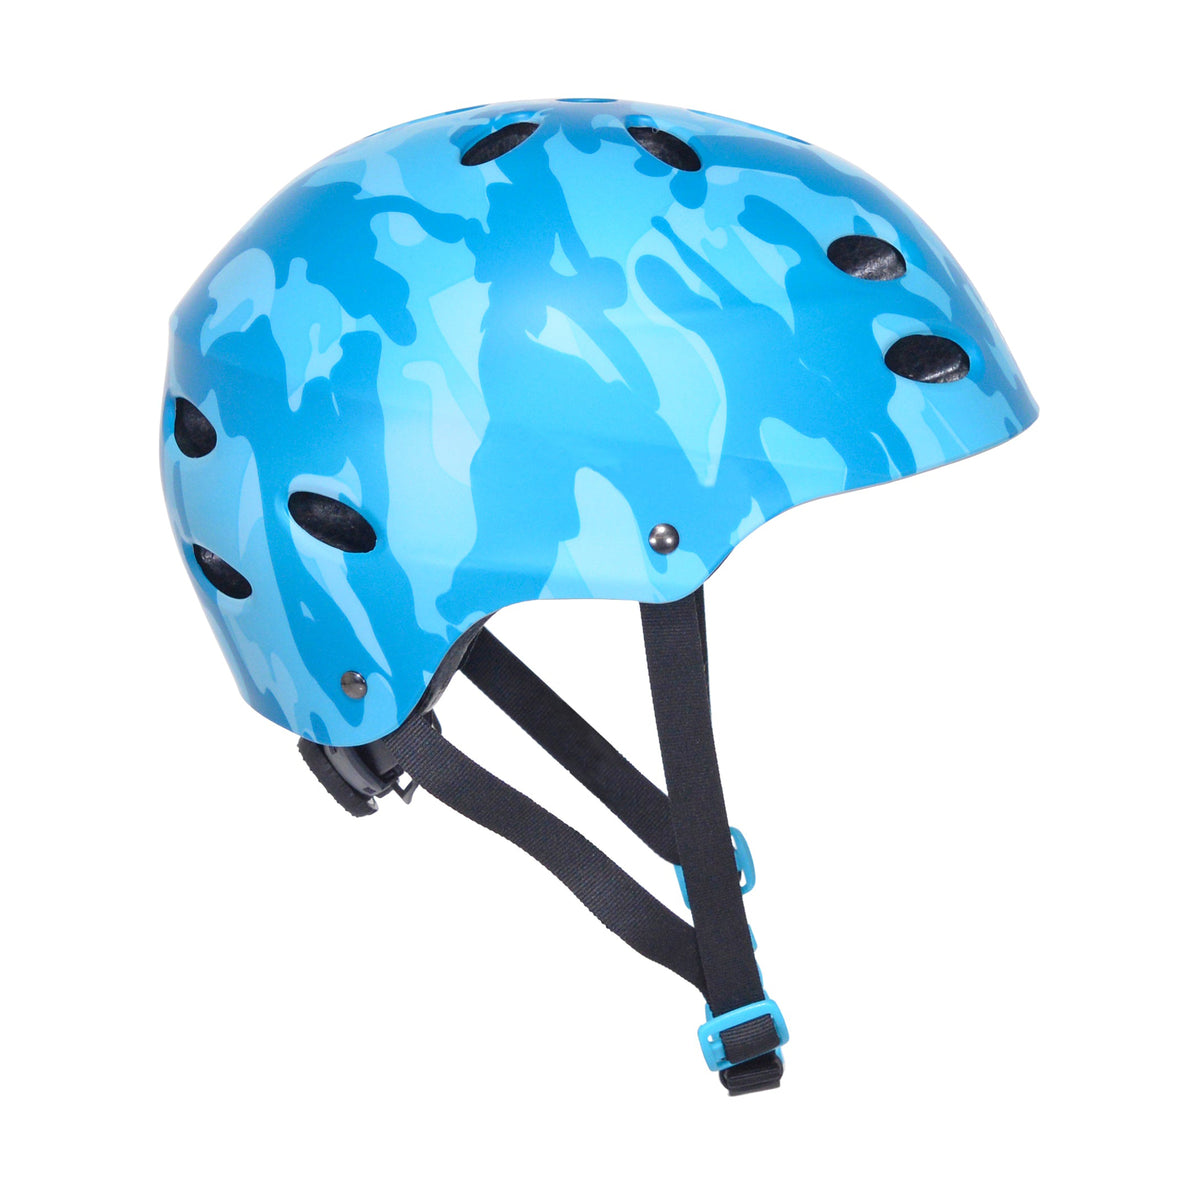 Kent Blue Camo Youth Multi-Sport Helmet | Helmet for Kids Ages 8+